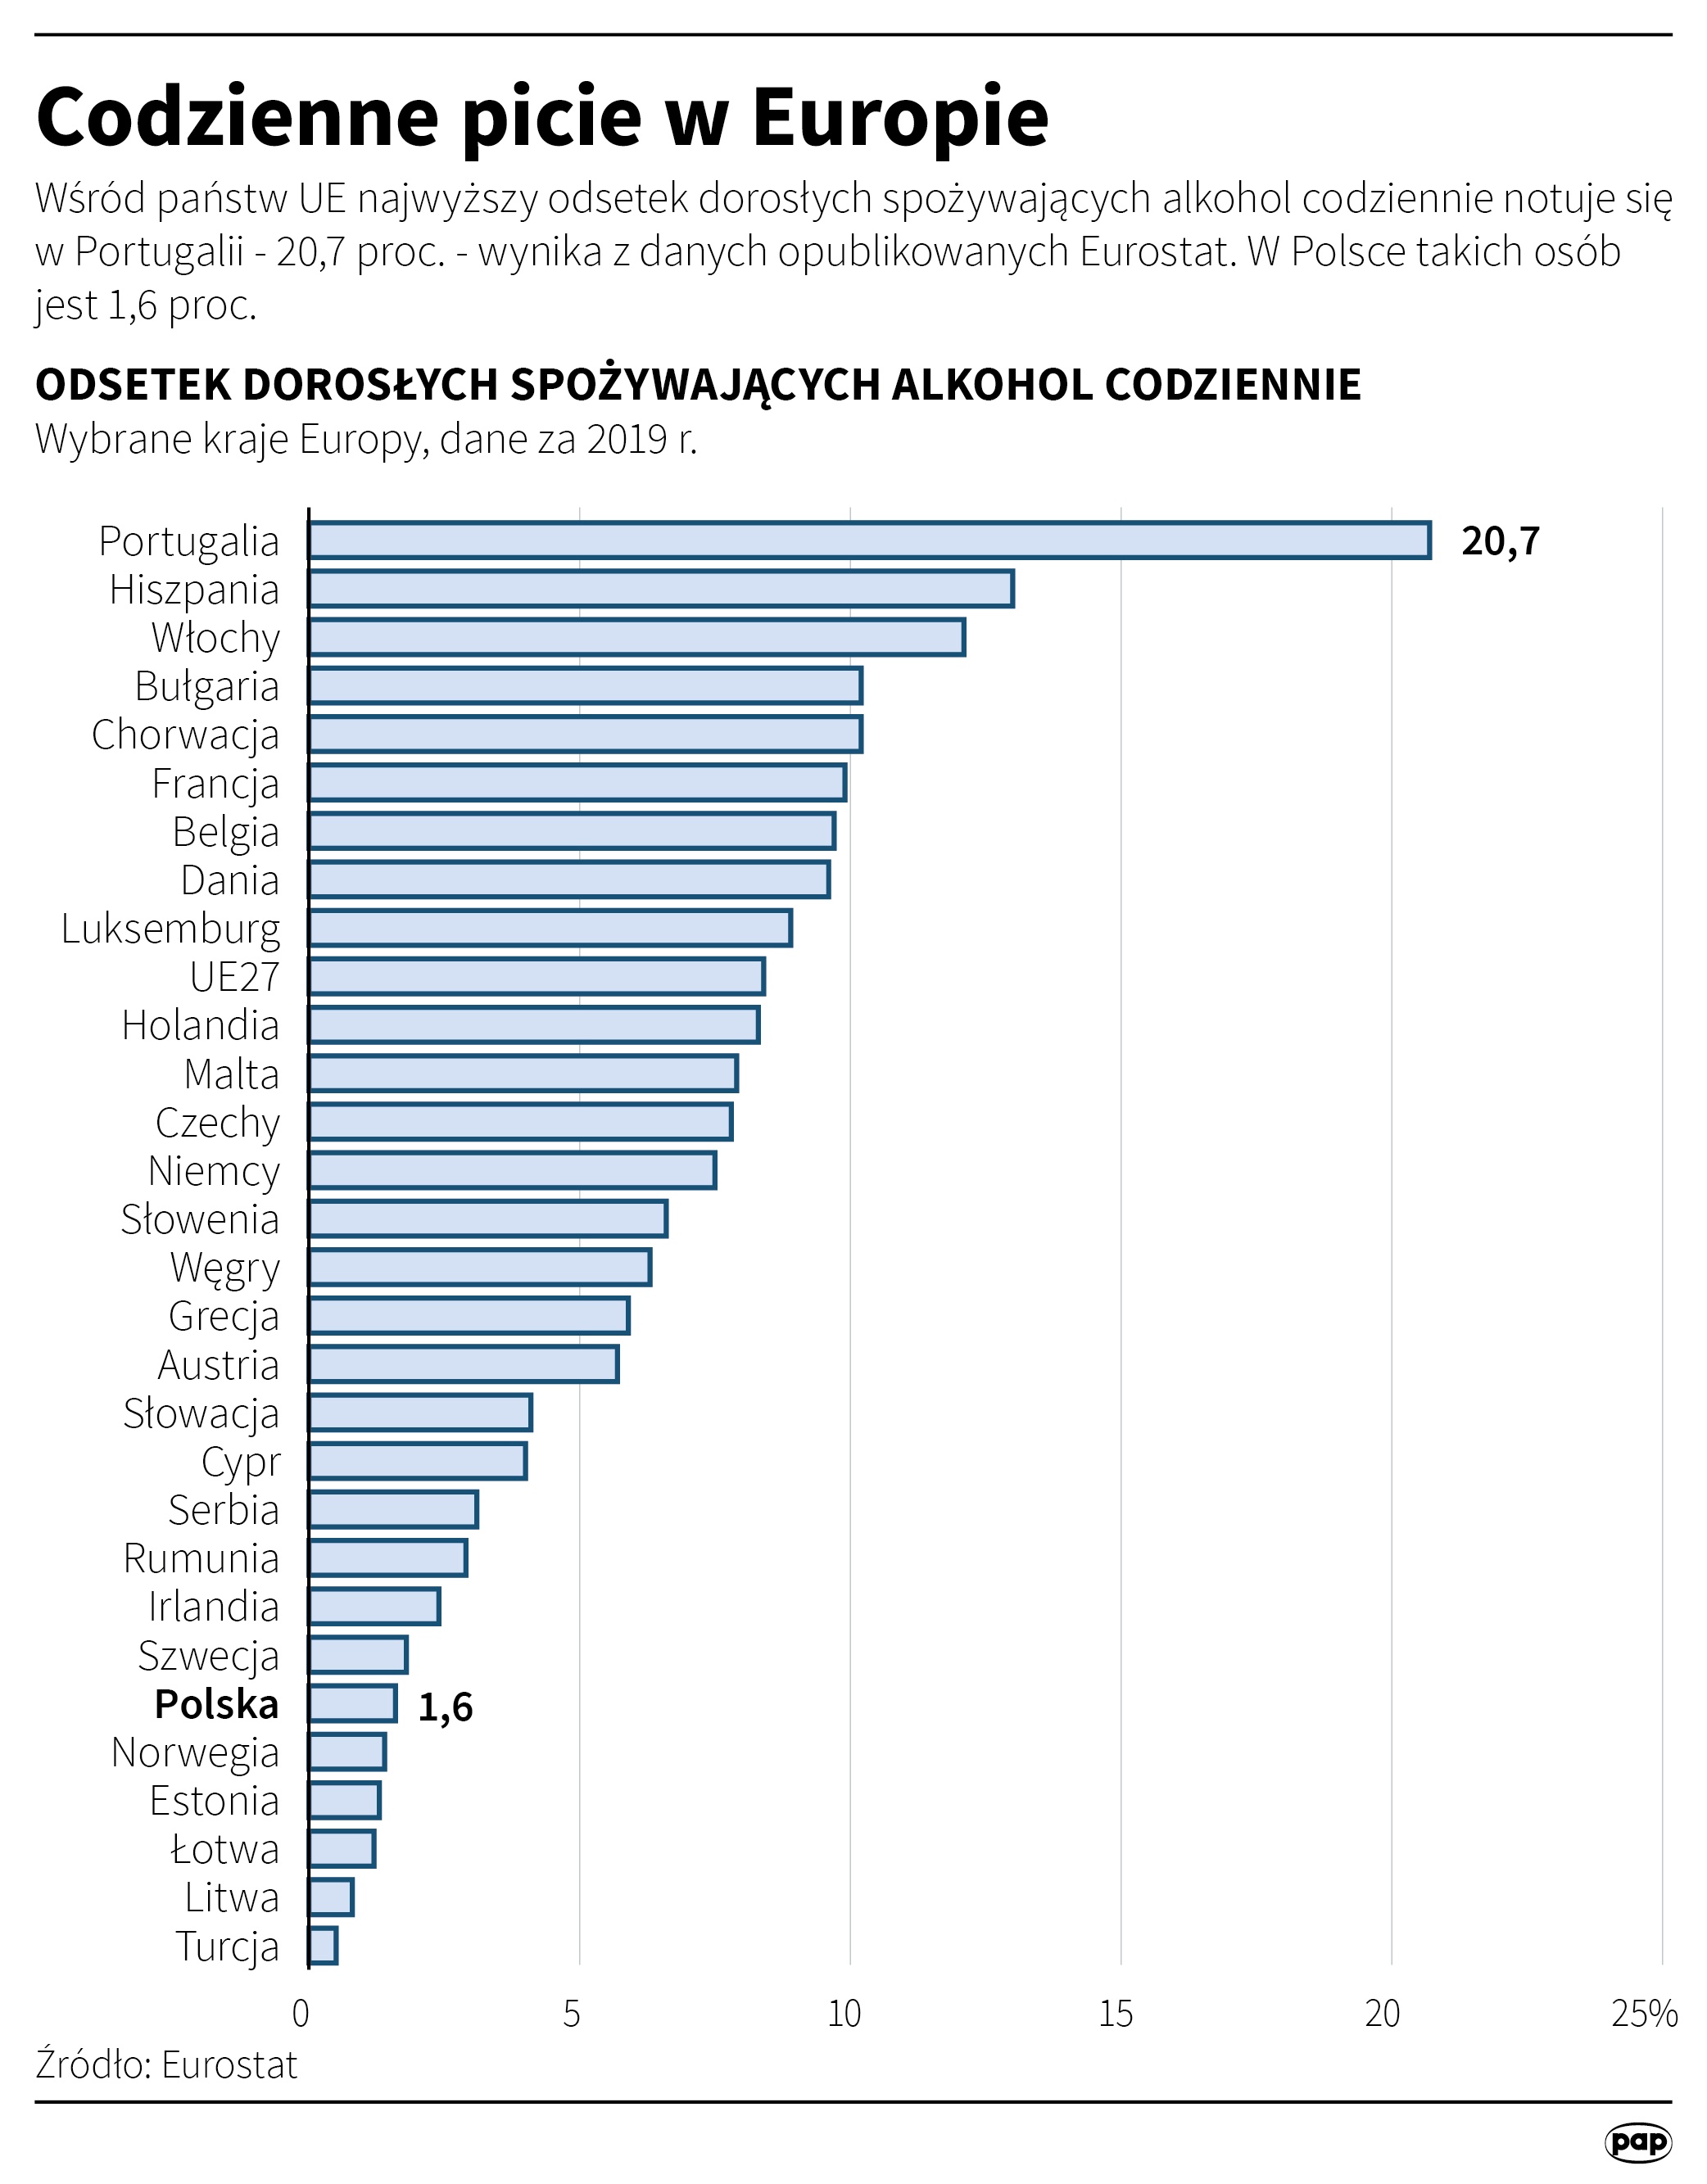 Codzienne picie alkoholu w Europie, 2019